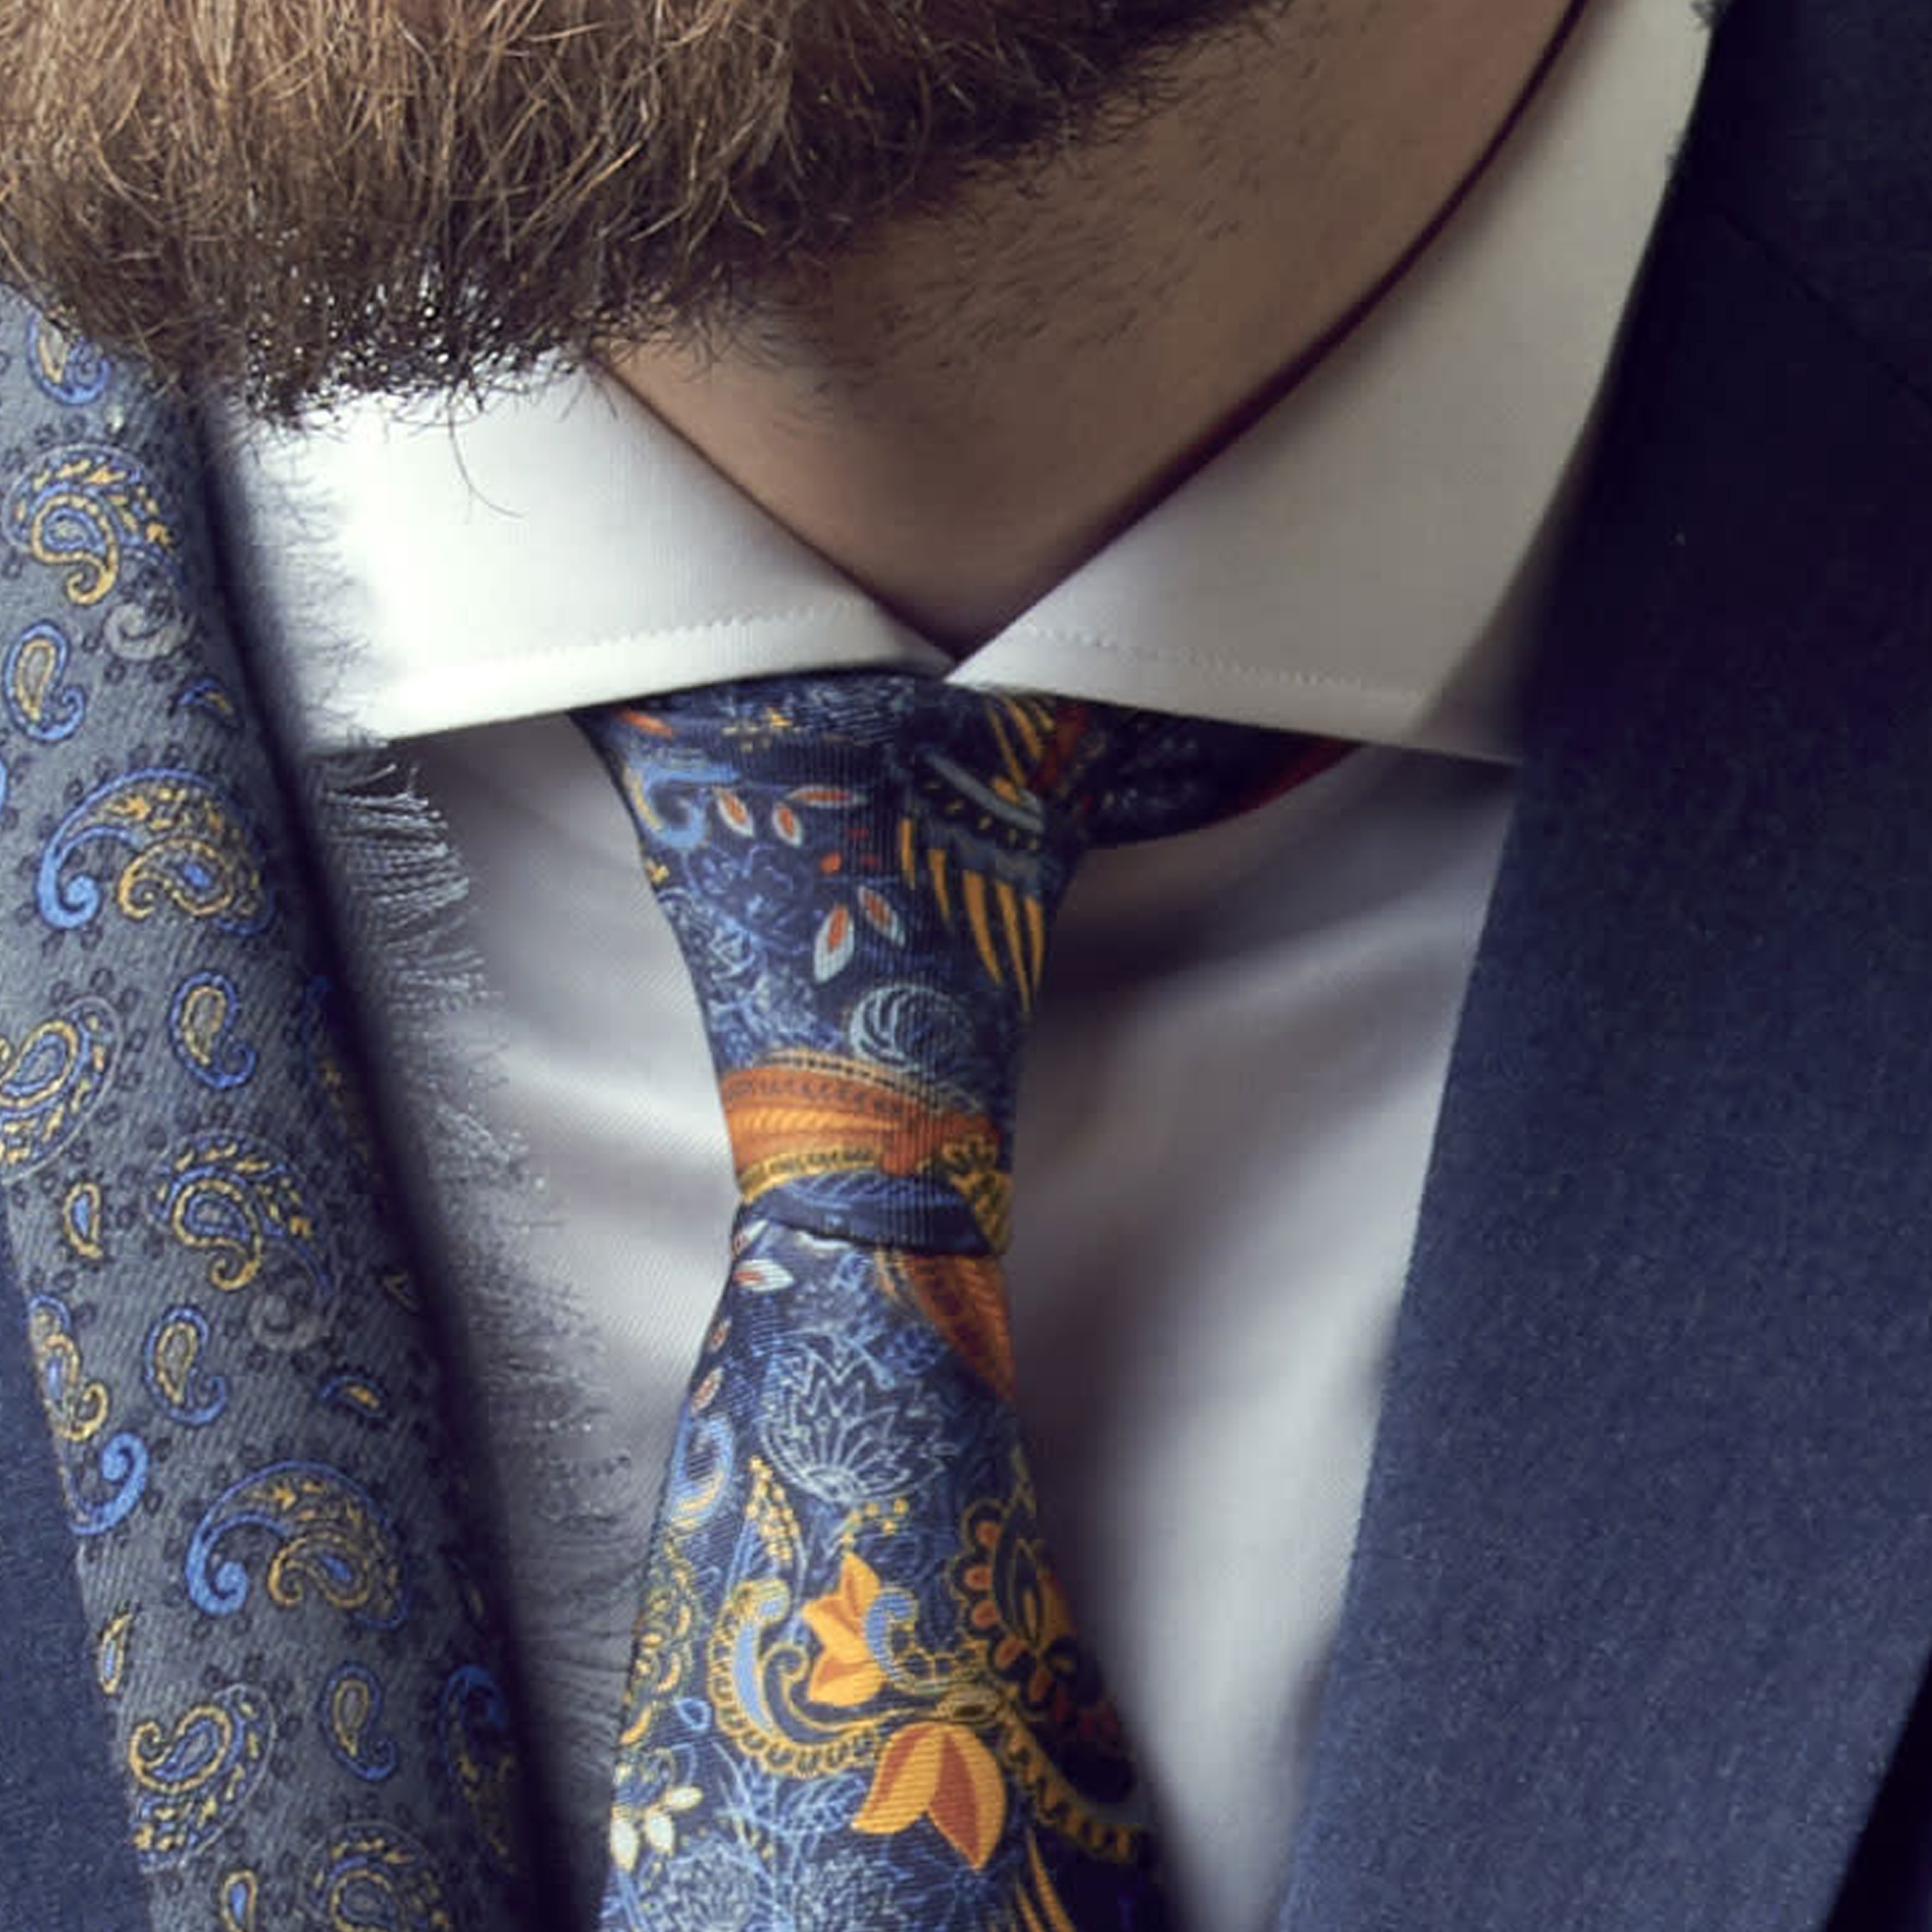 Comment nettoyer une cravate tachee - THE NINES